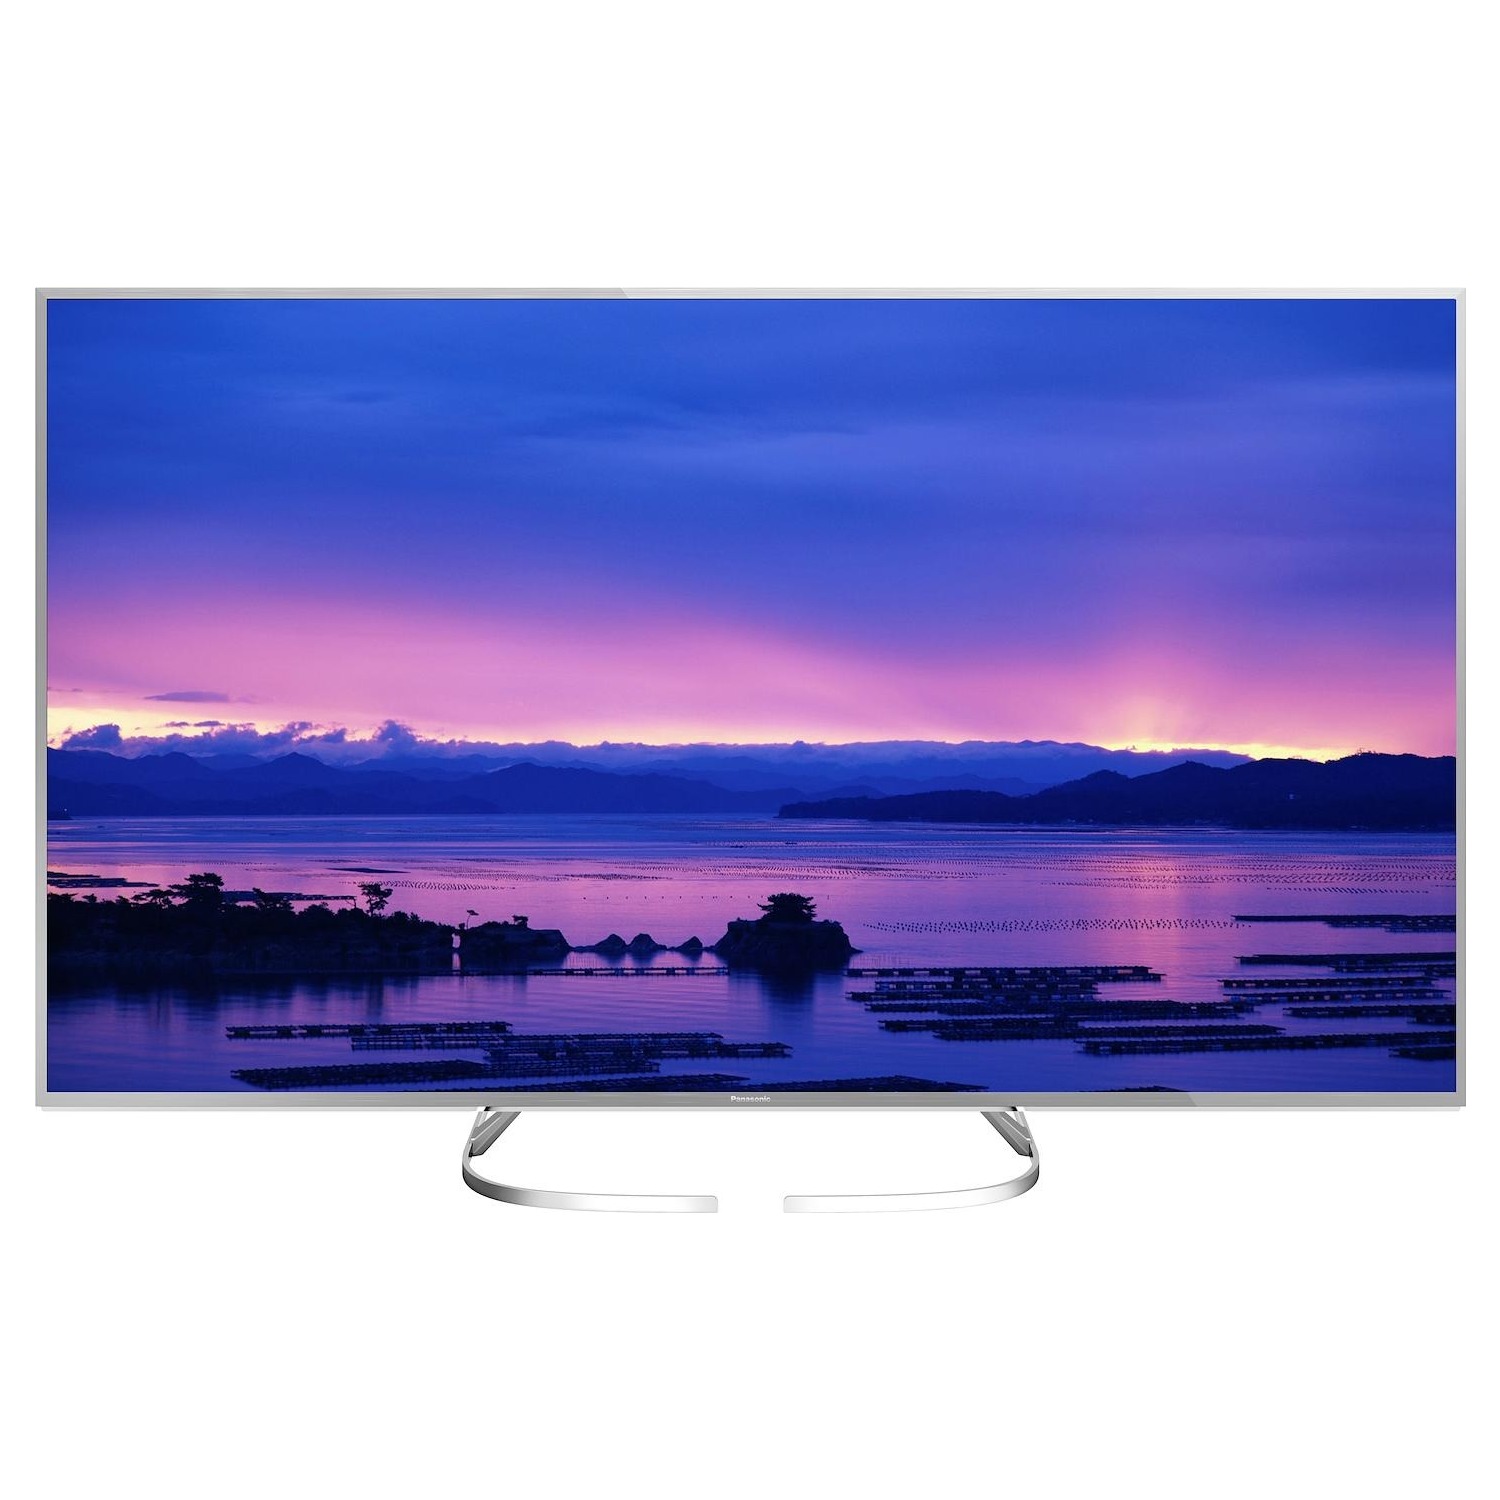 Immagine per TV LED Smart 4K UHD Panasonic 65EX703 da DIMOStore